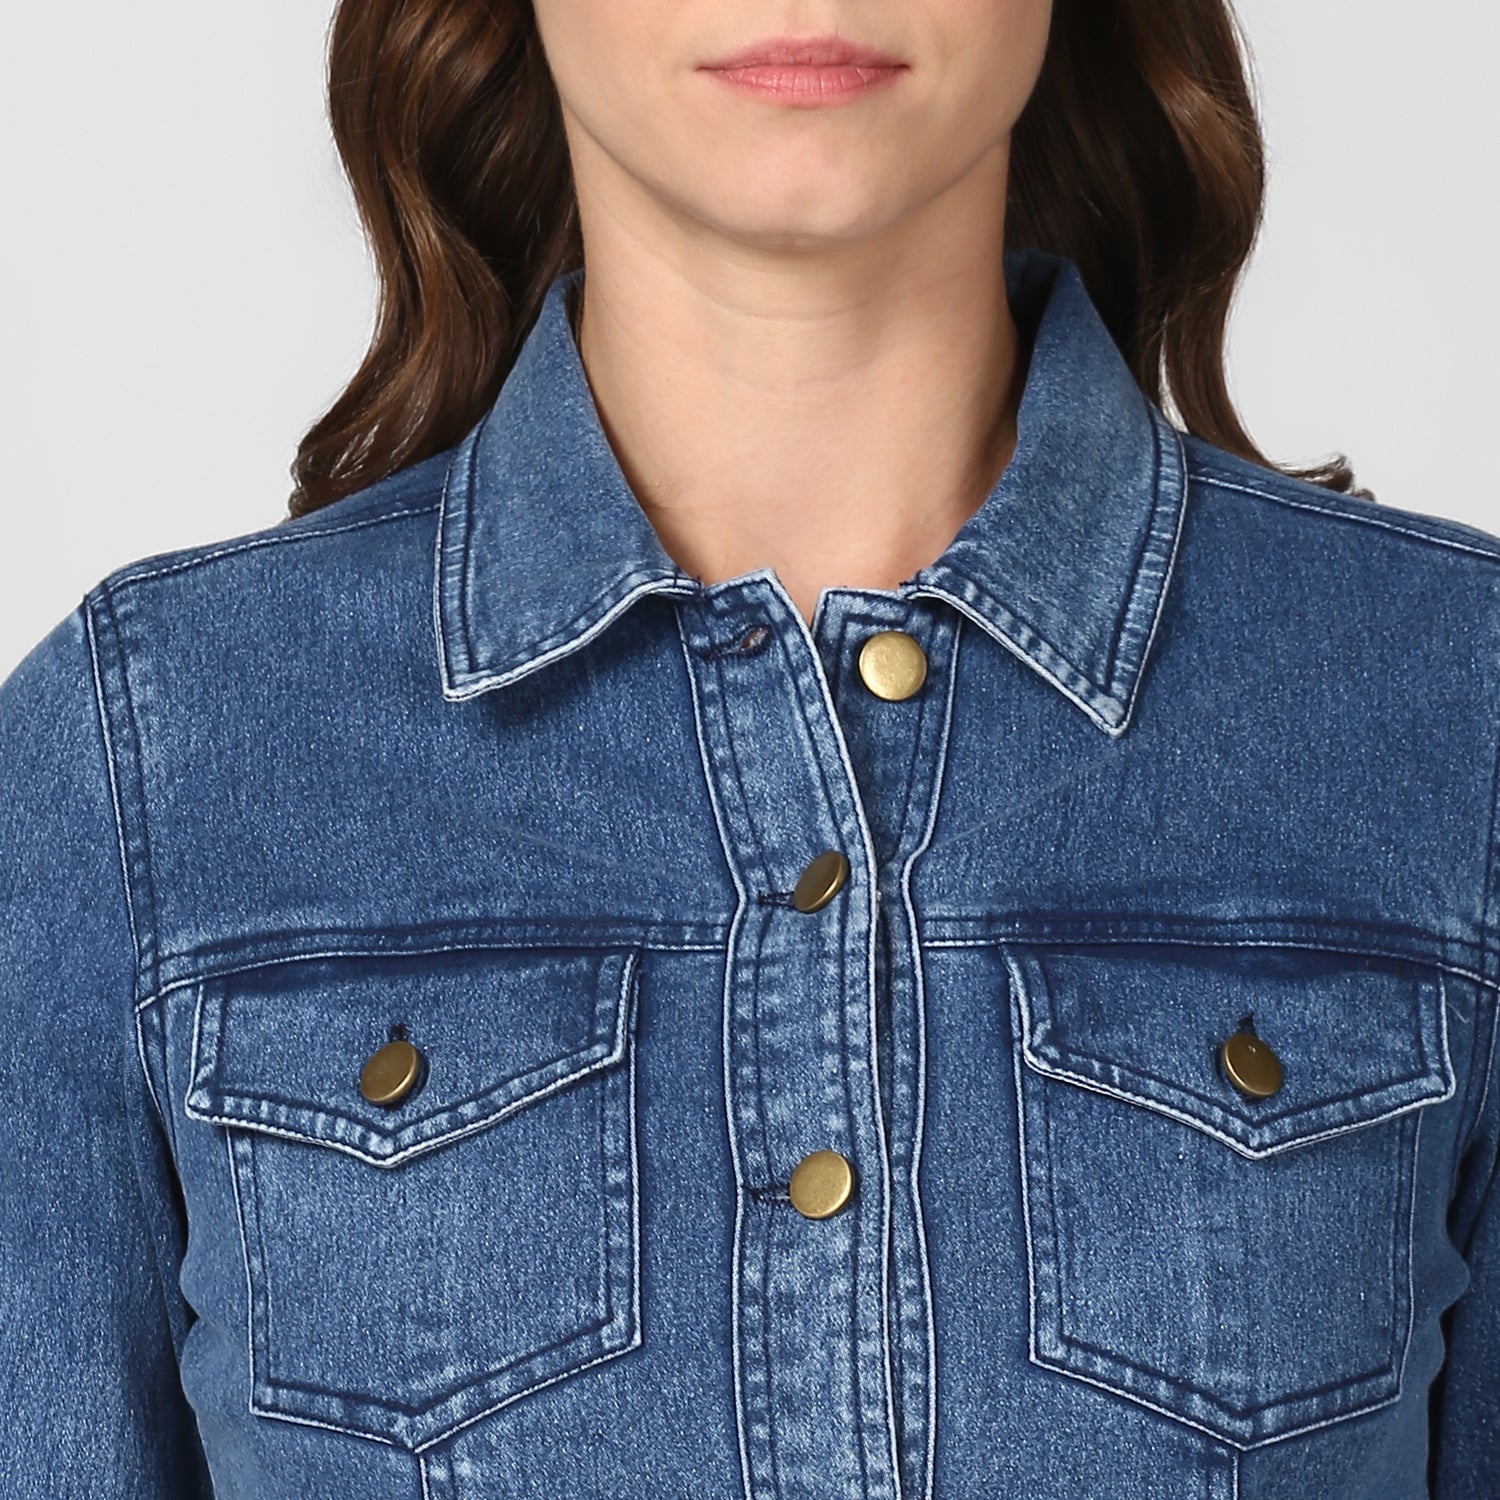 Women's Blue Denim Peplum Style Jacket - StyleStone